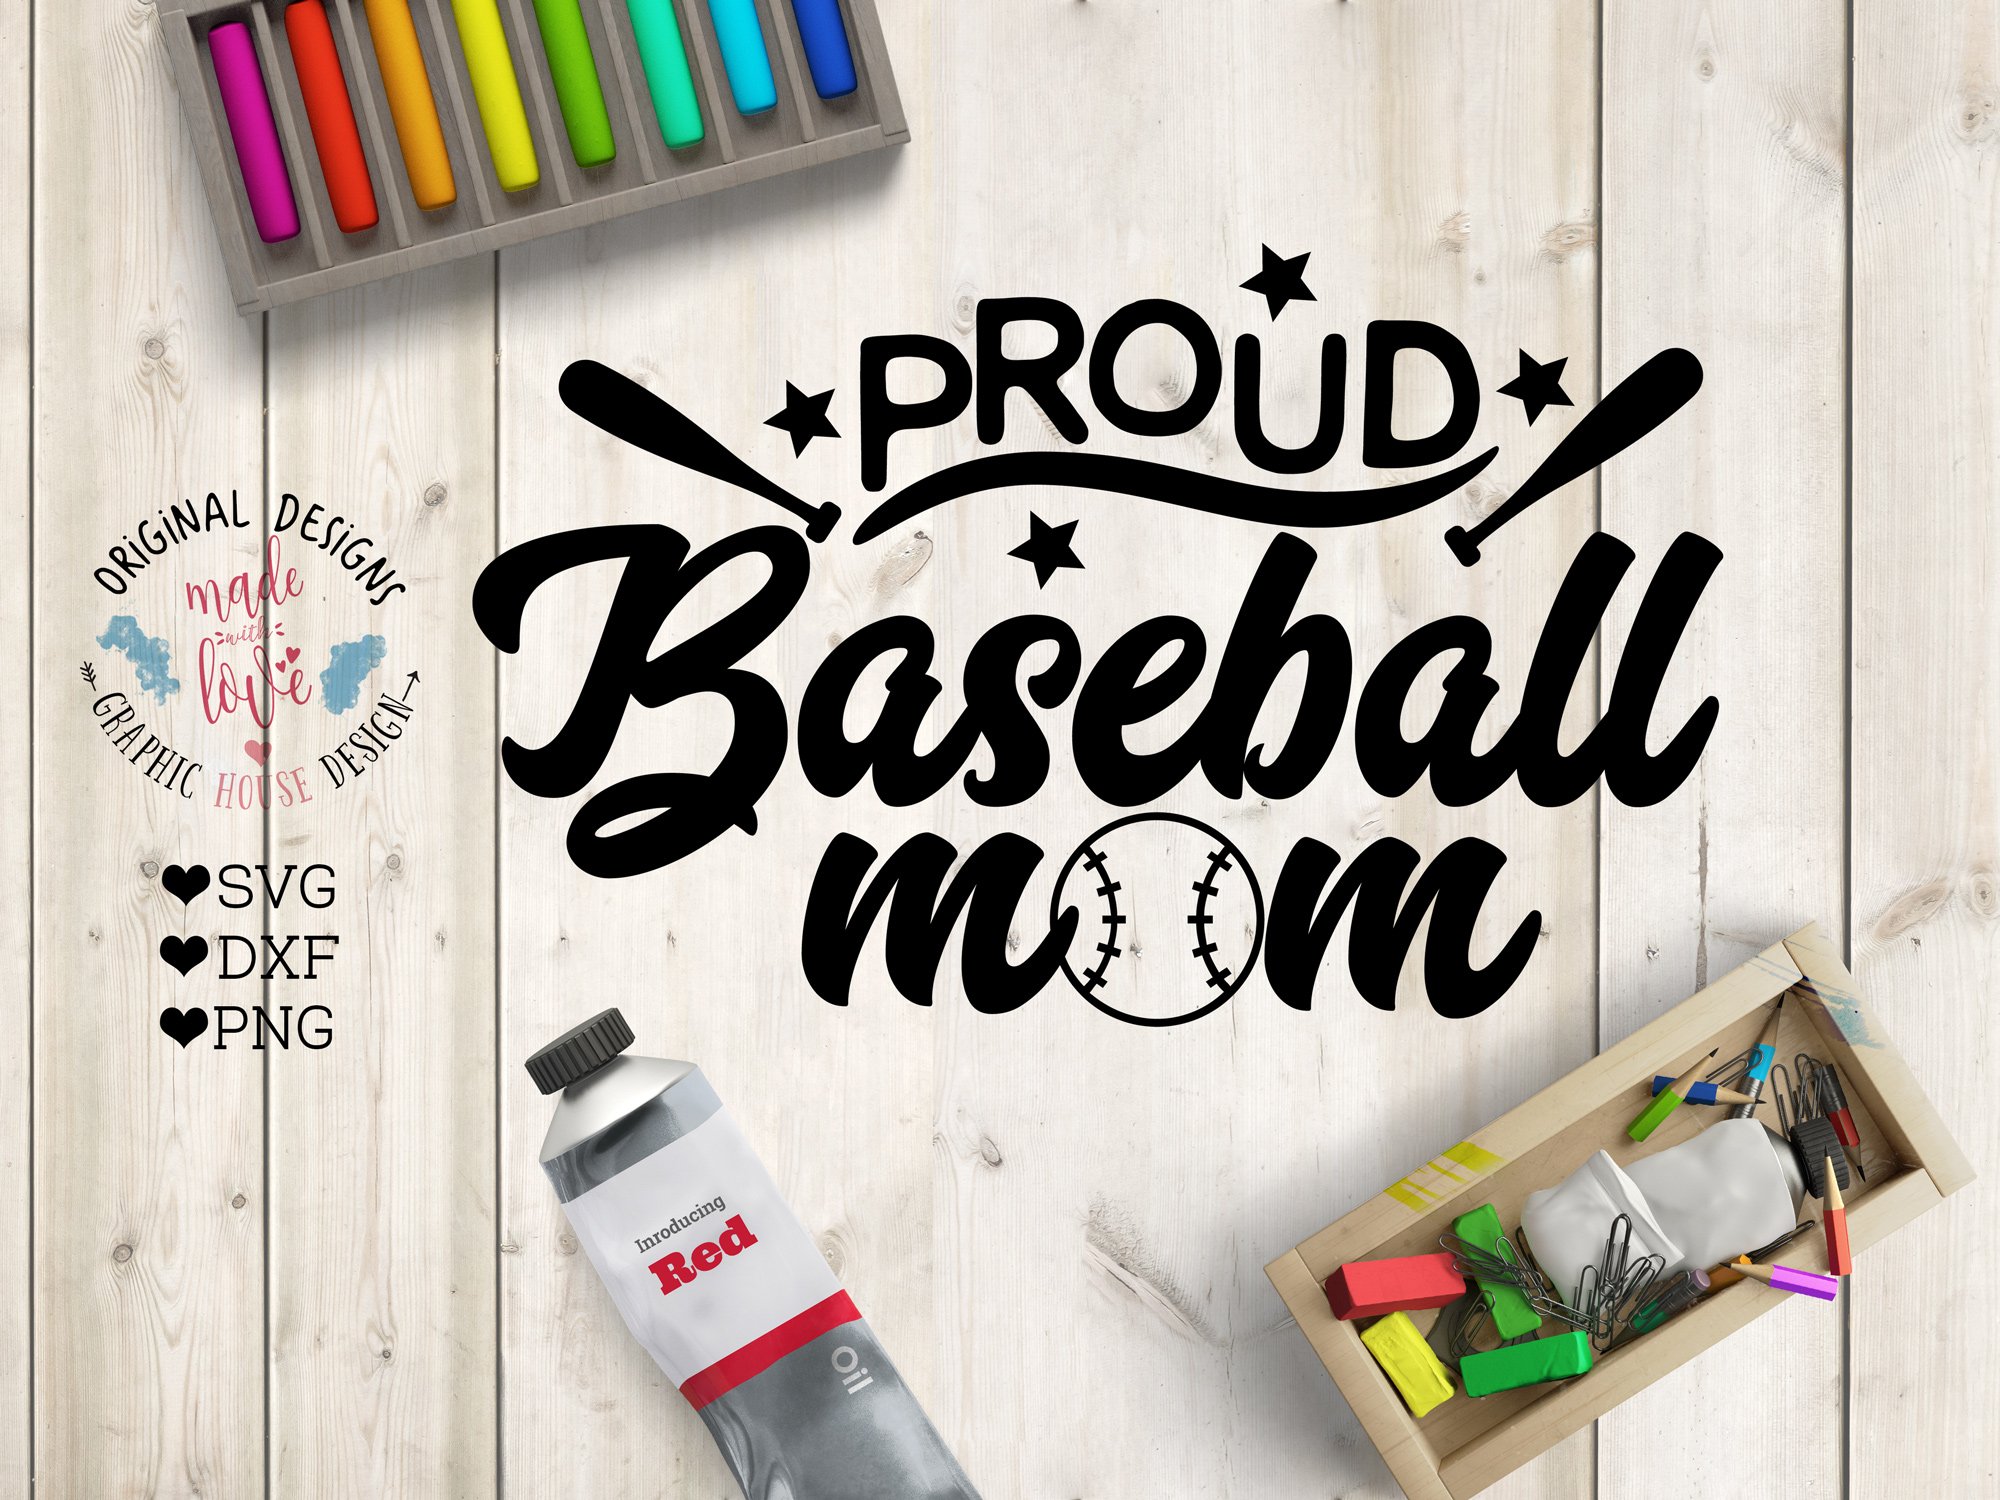 Proud Baseball Mom Cutting File cover image.